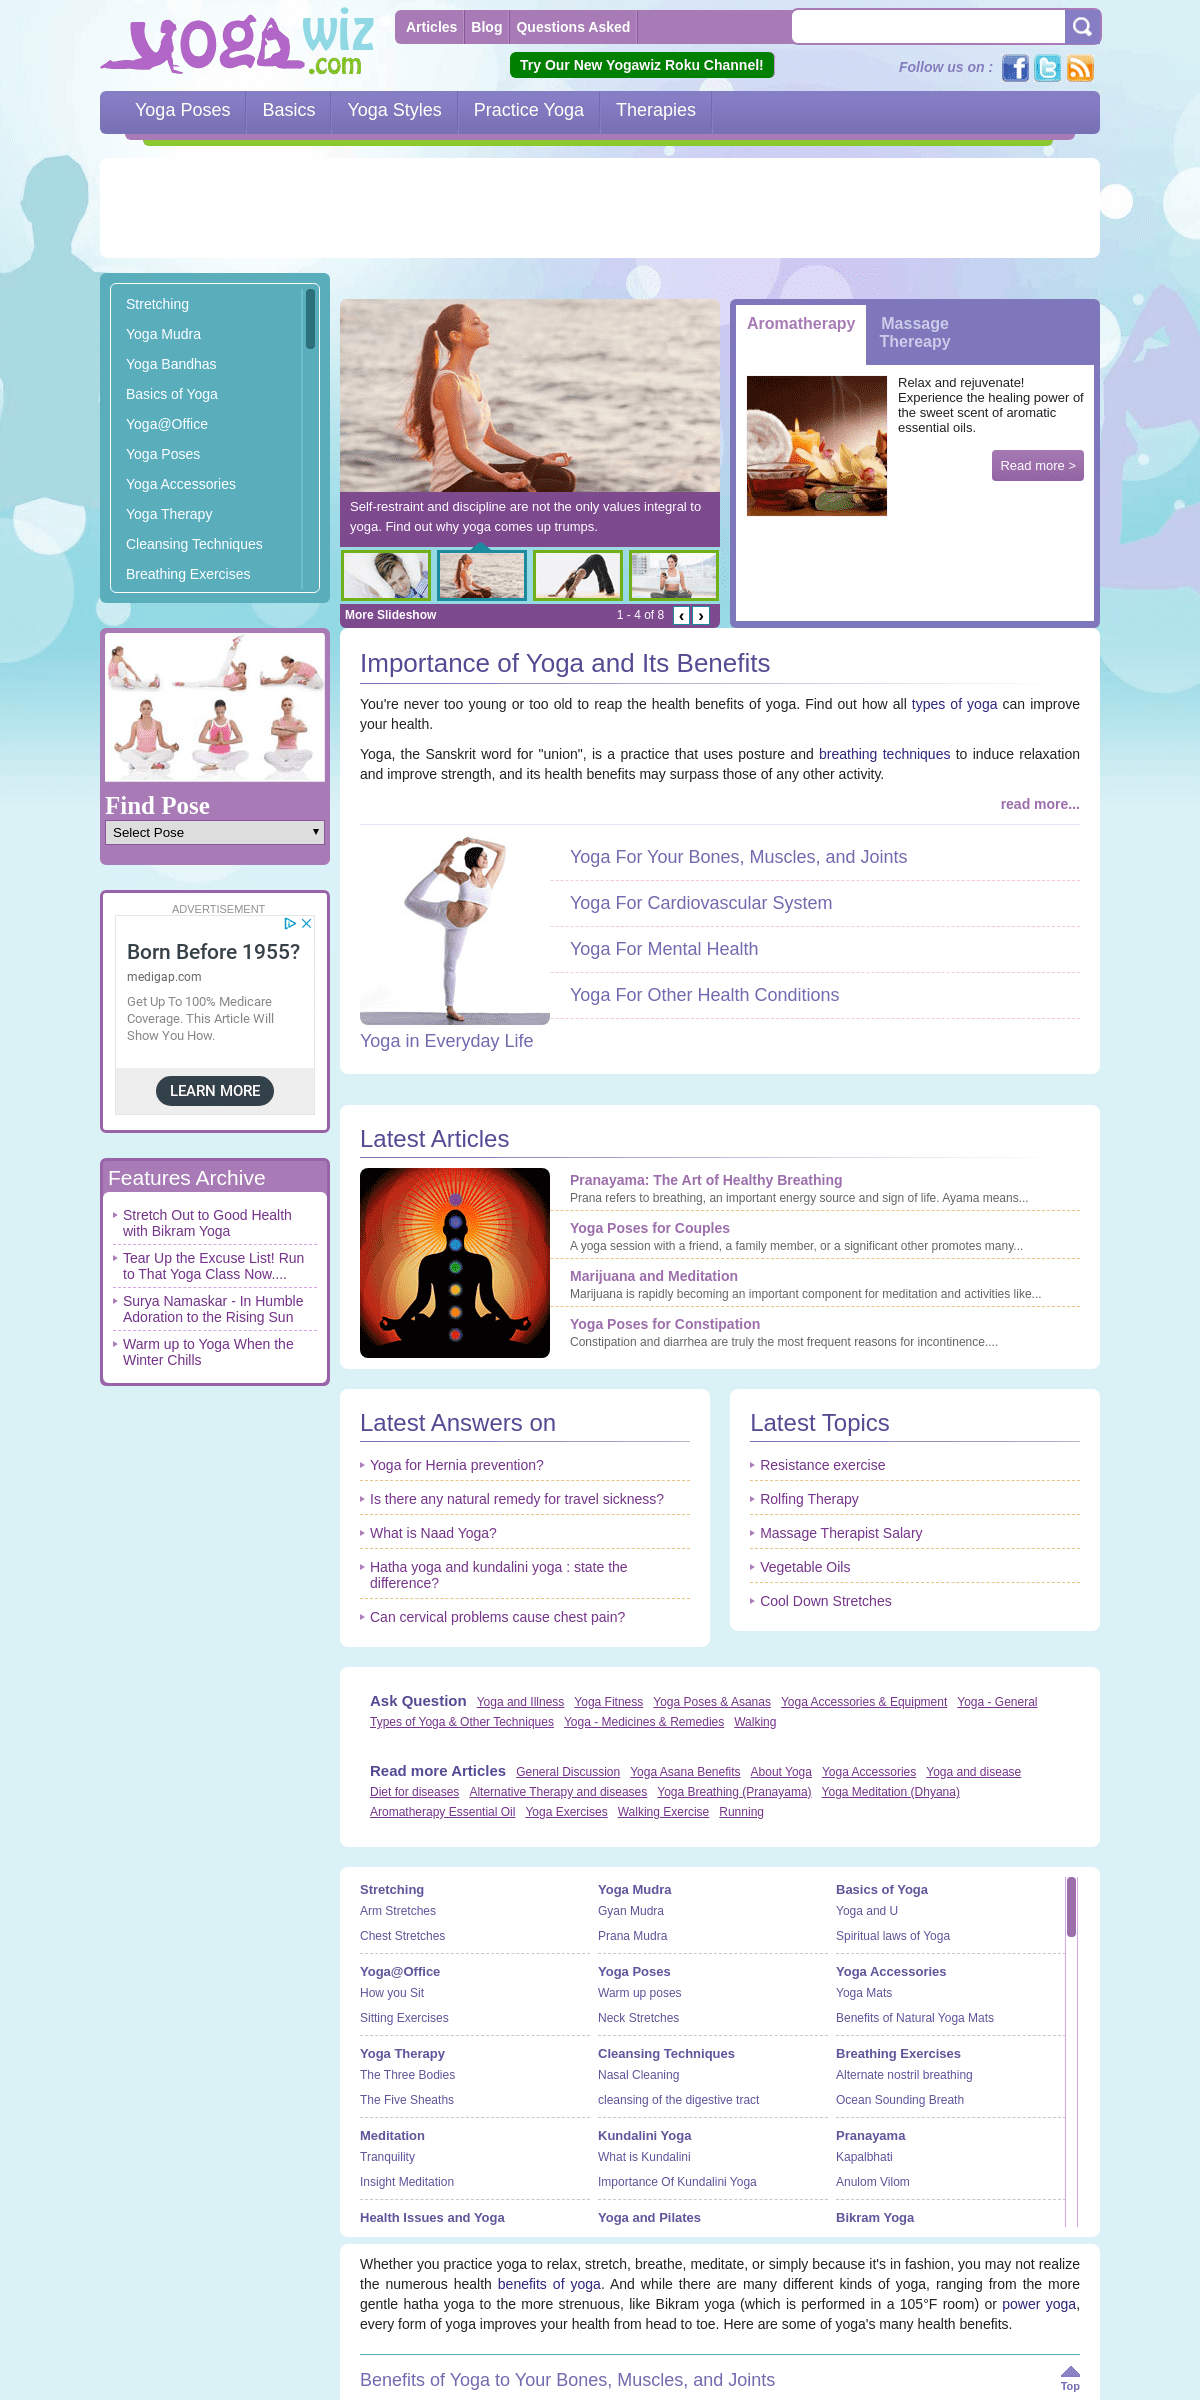 A complete backup of yogawiz.com